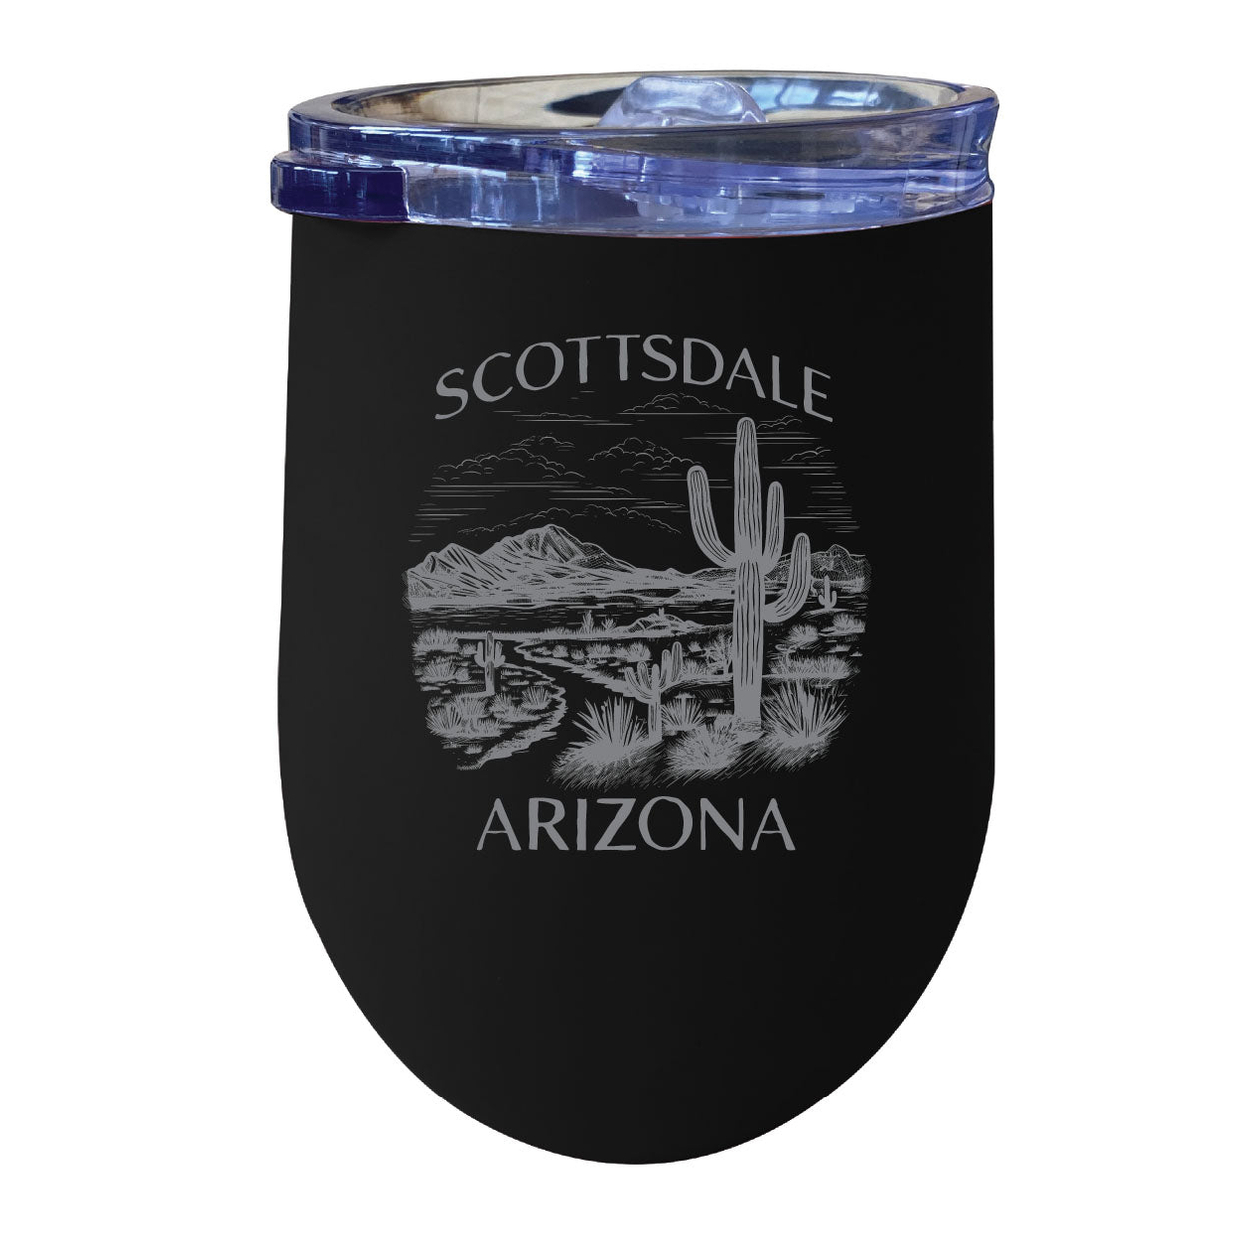 Scottsdale Arizona Souvenir 12 Oz Engraved Insulated Wine Stainless Steel Tumbler - Black,,Single Unit